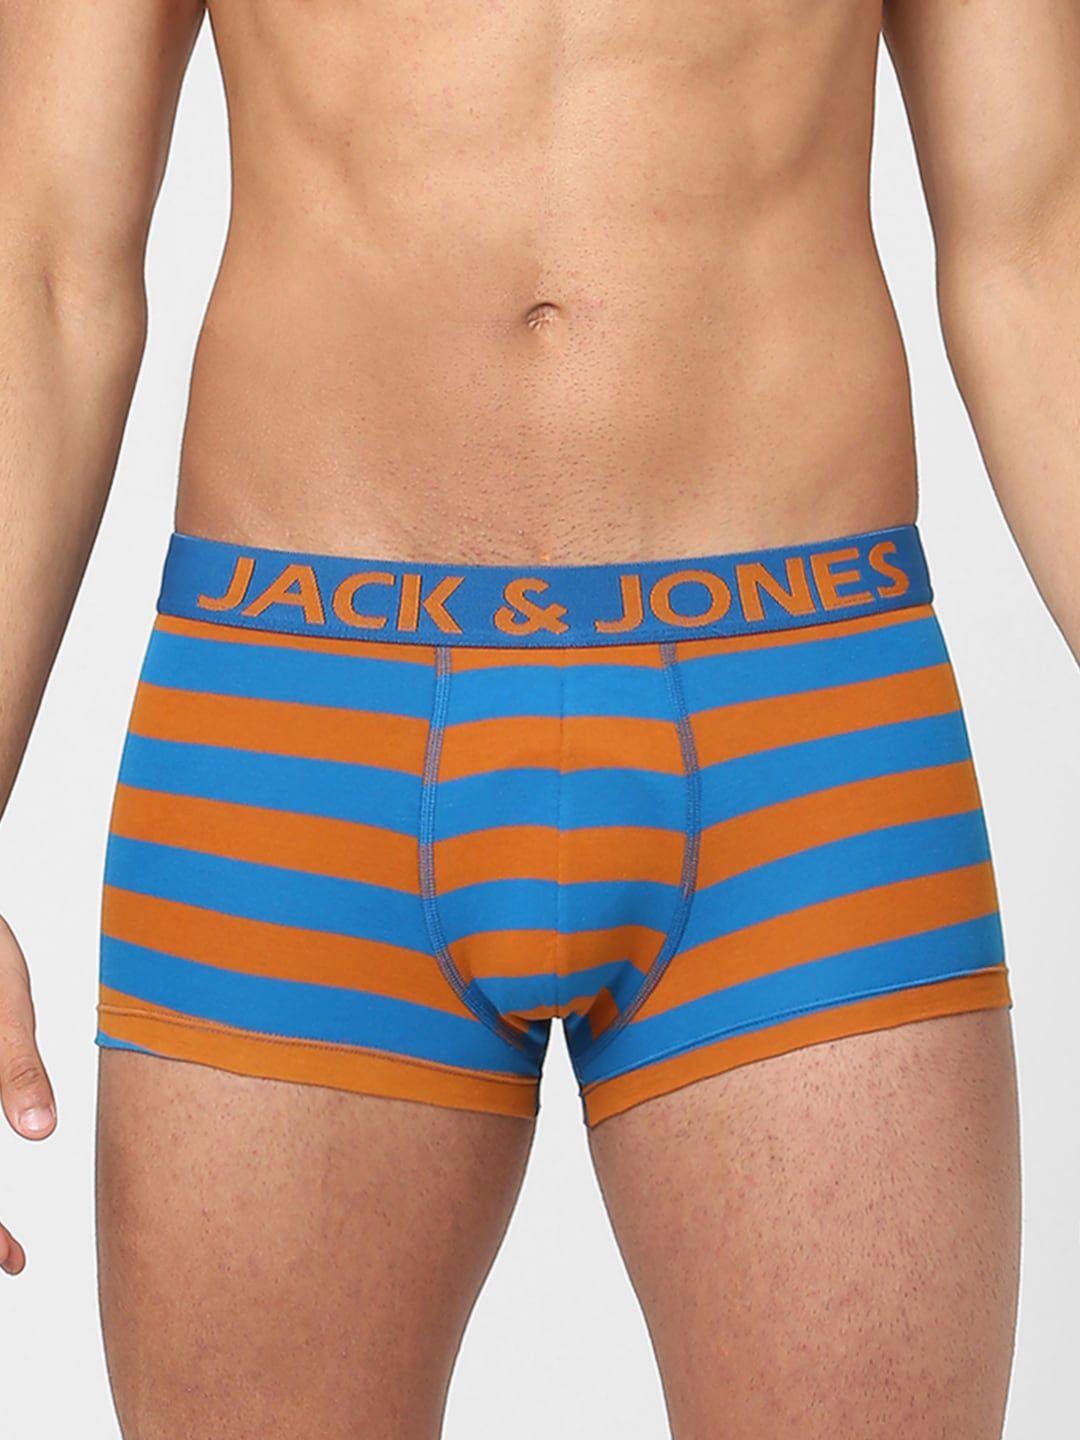 jack-&-jones-men-orange-&-blue-striped-trunks-253537202